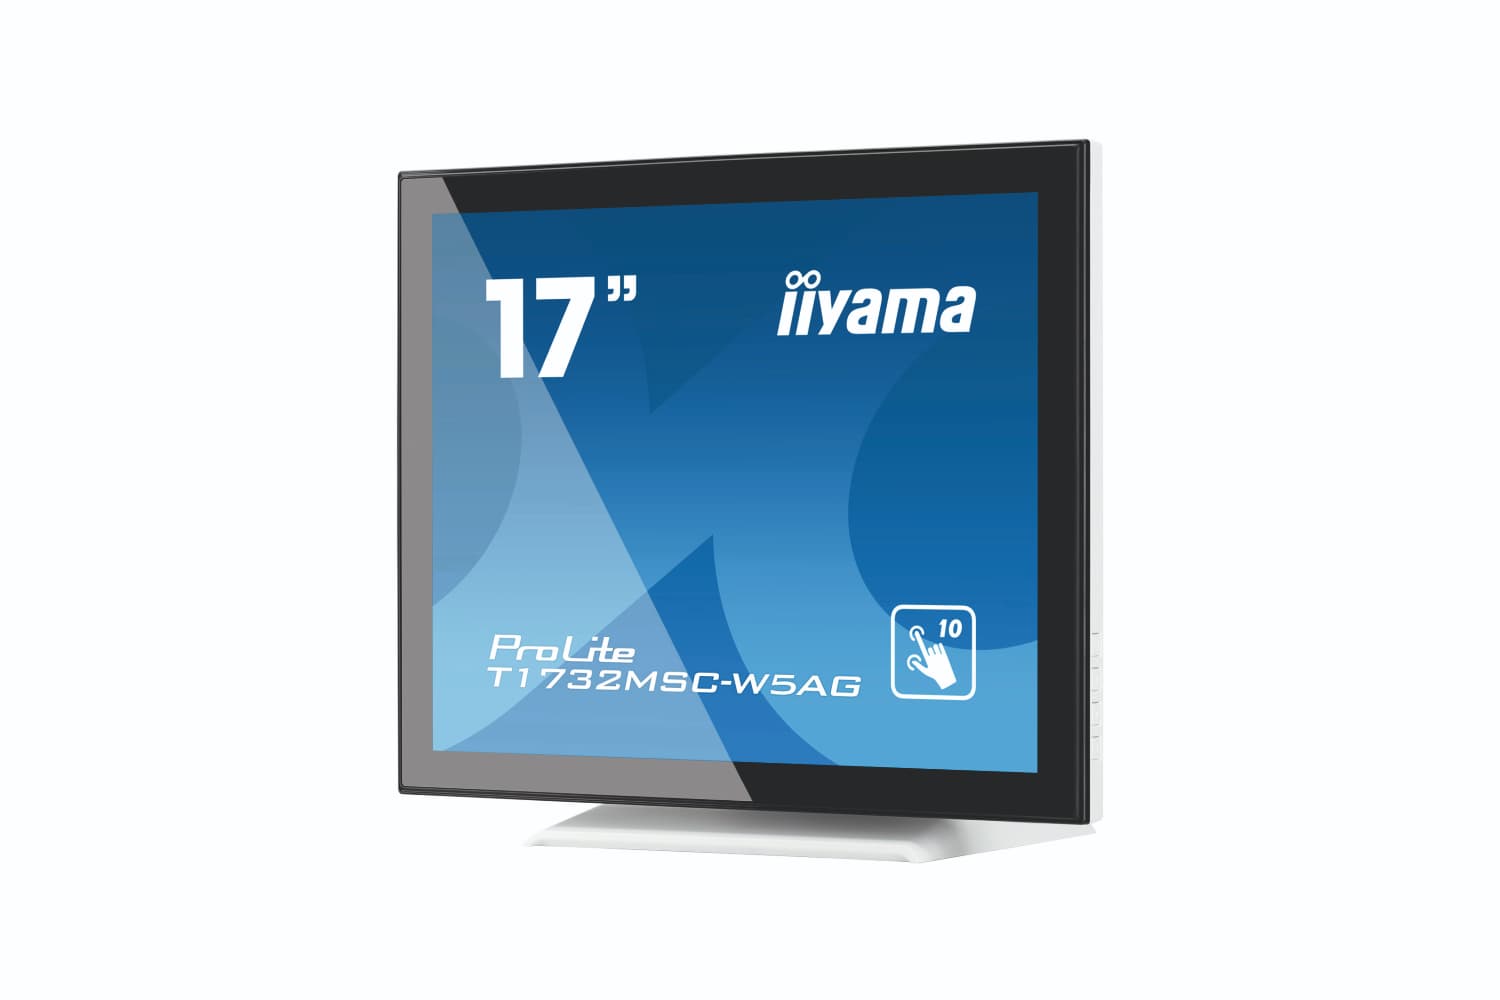  Фото интерактивная панель iiyama 17" t1732msc-w5ag - фото 9